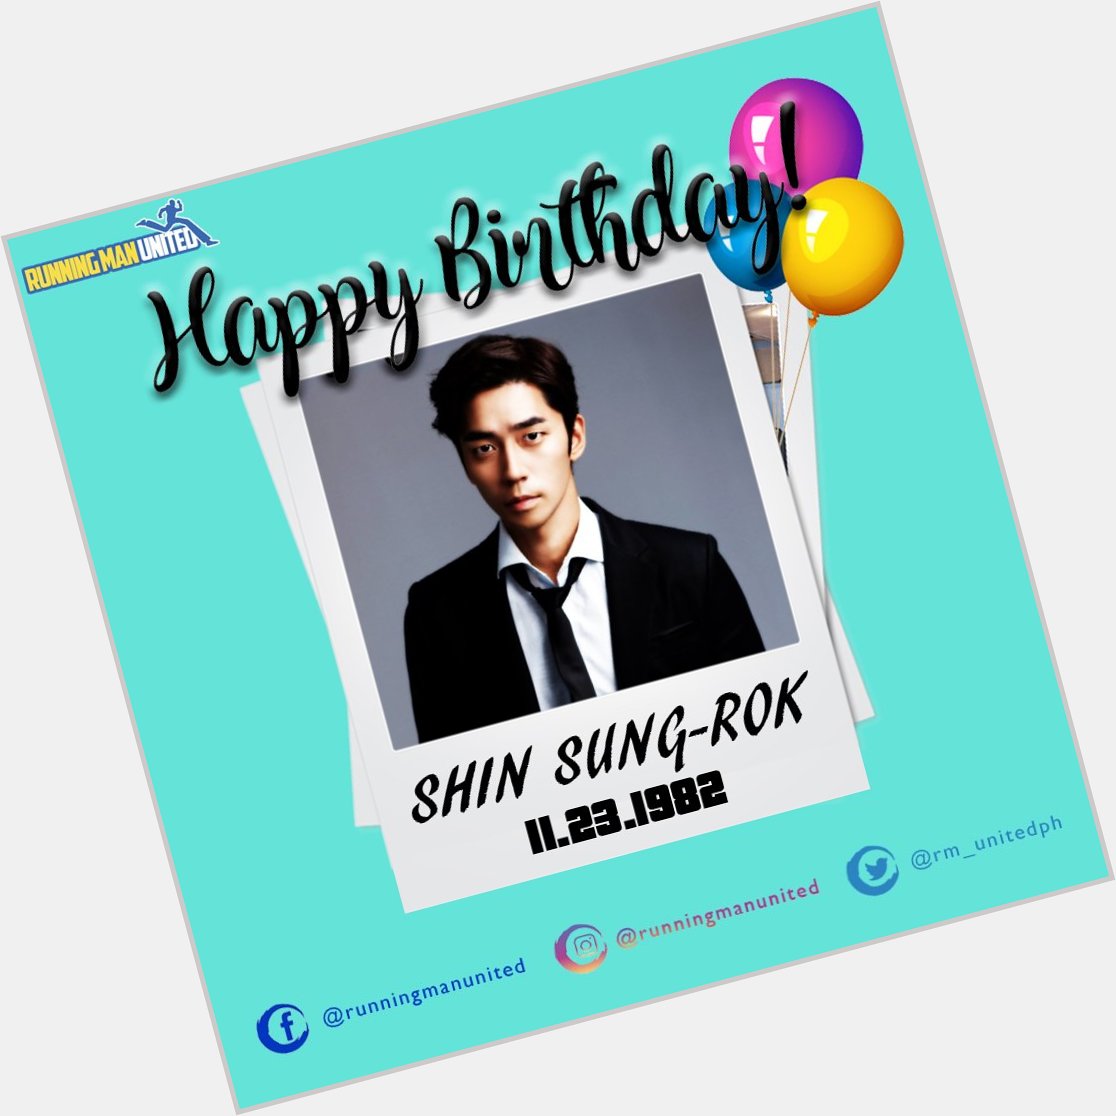 Happy Birthday Shin Sung-rok! 